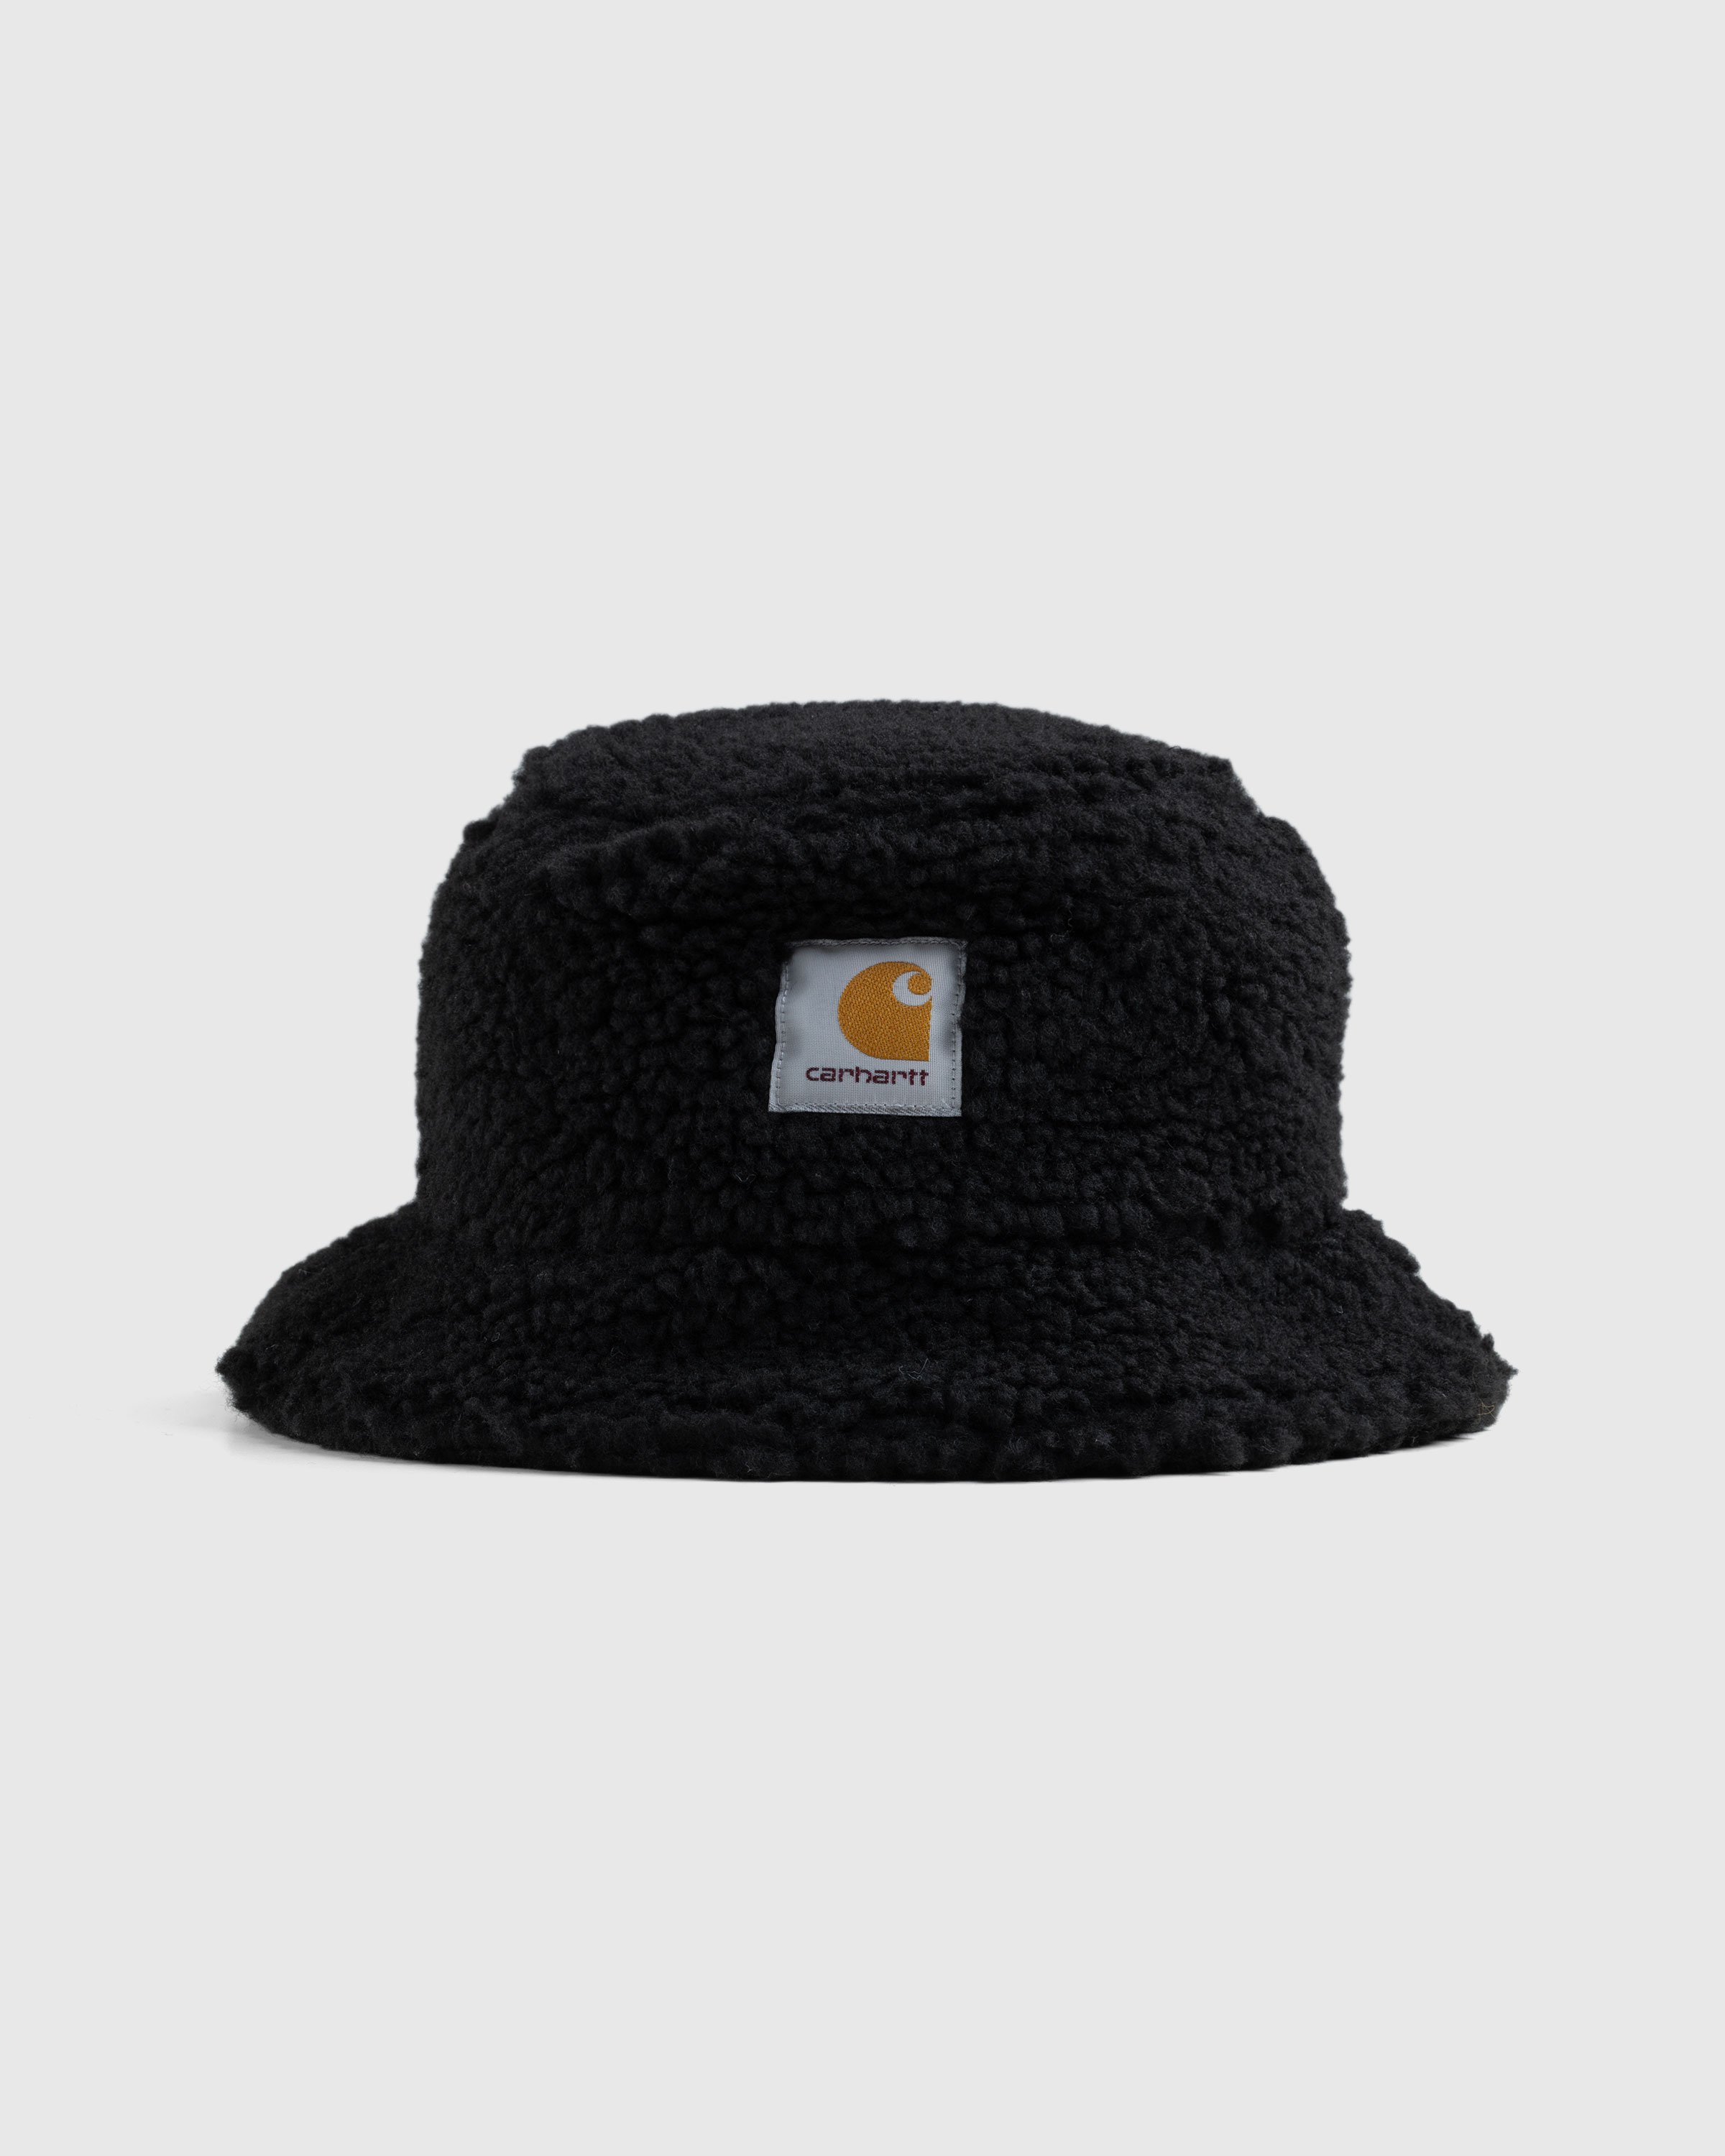 Carhartt WIP - Prentis Bucket Hat Black - Accessories - Black - Image 1